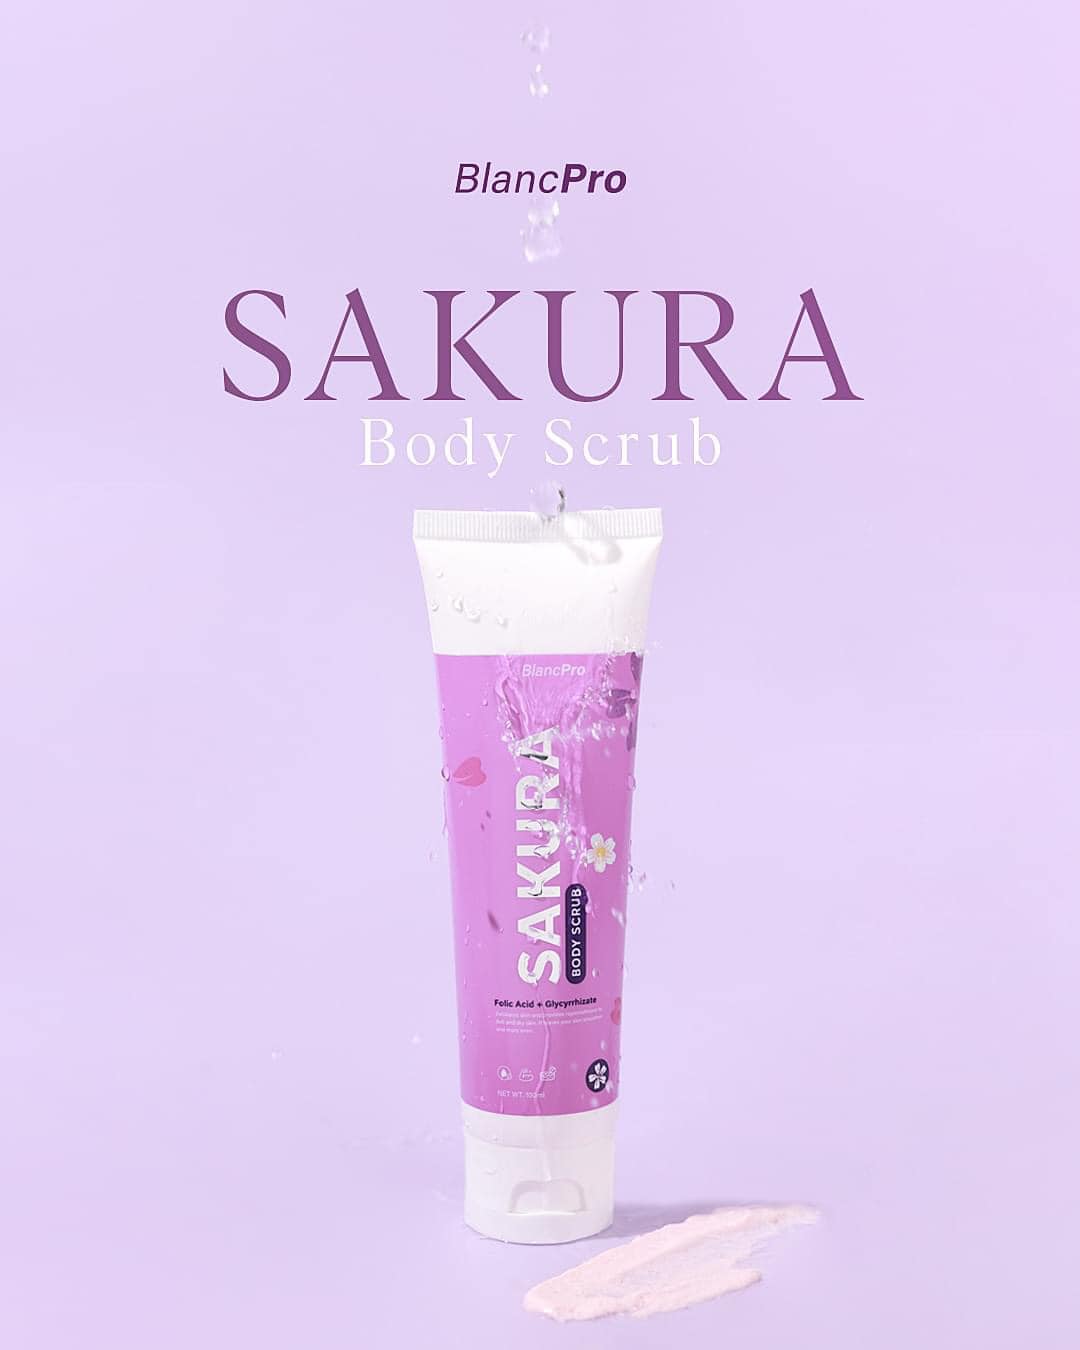 BlancPRO Sakura Body Scrub